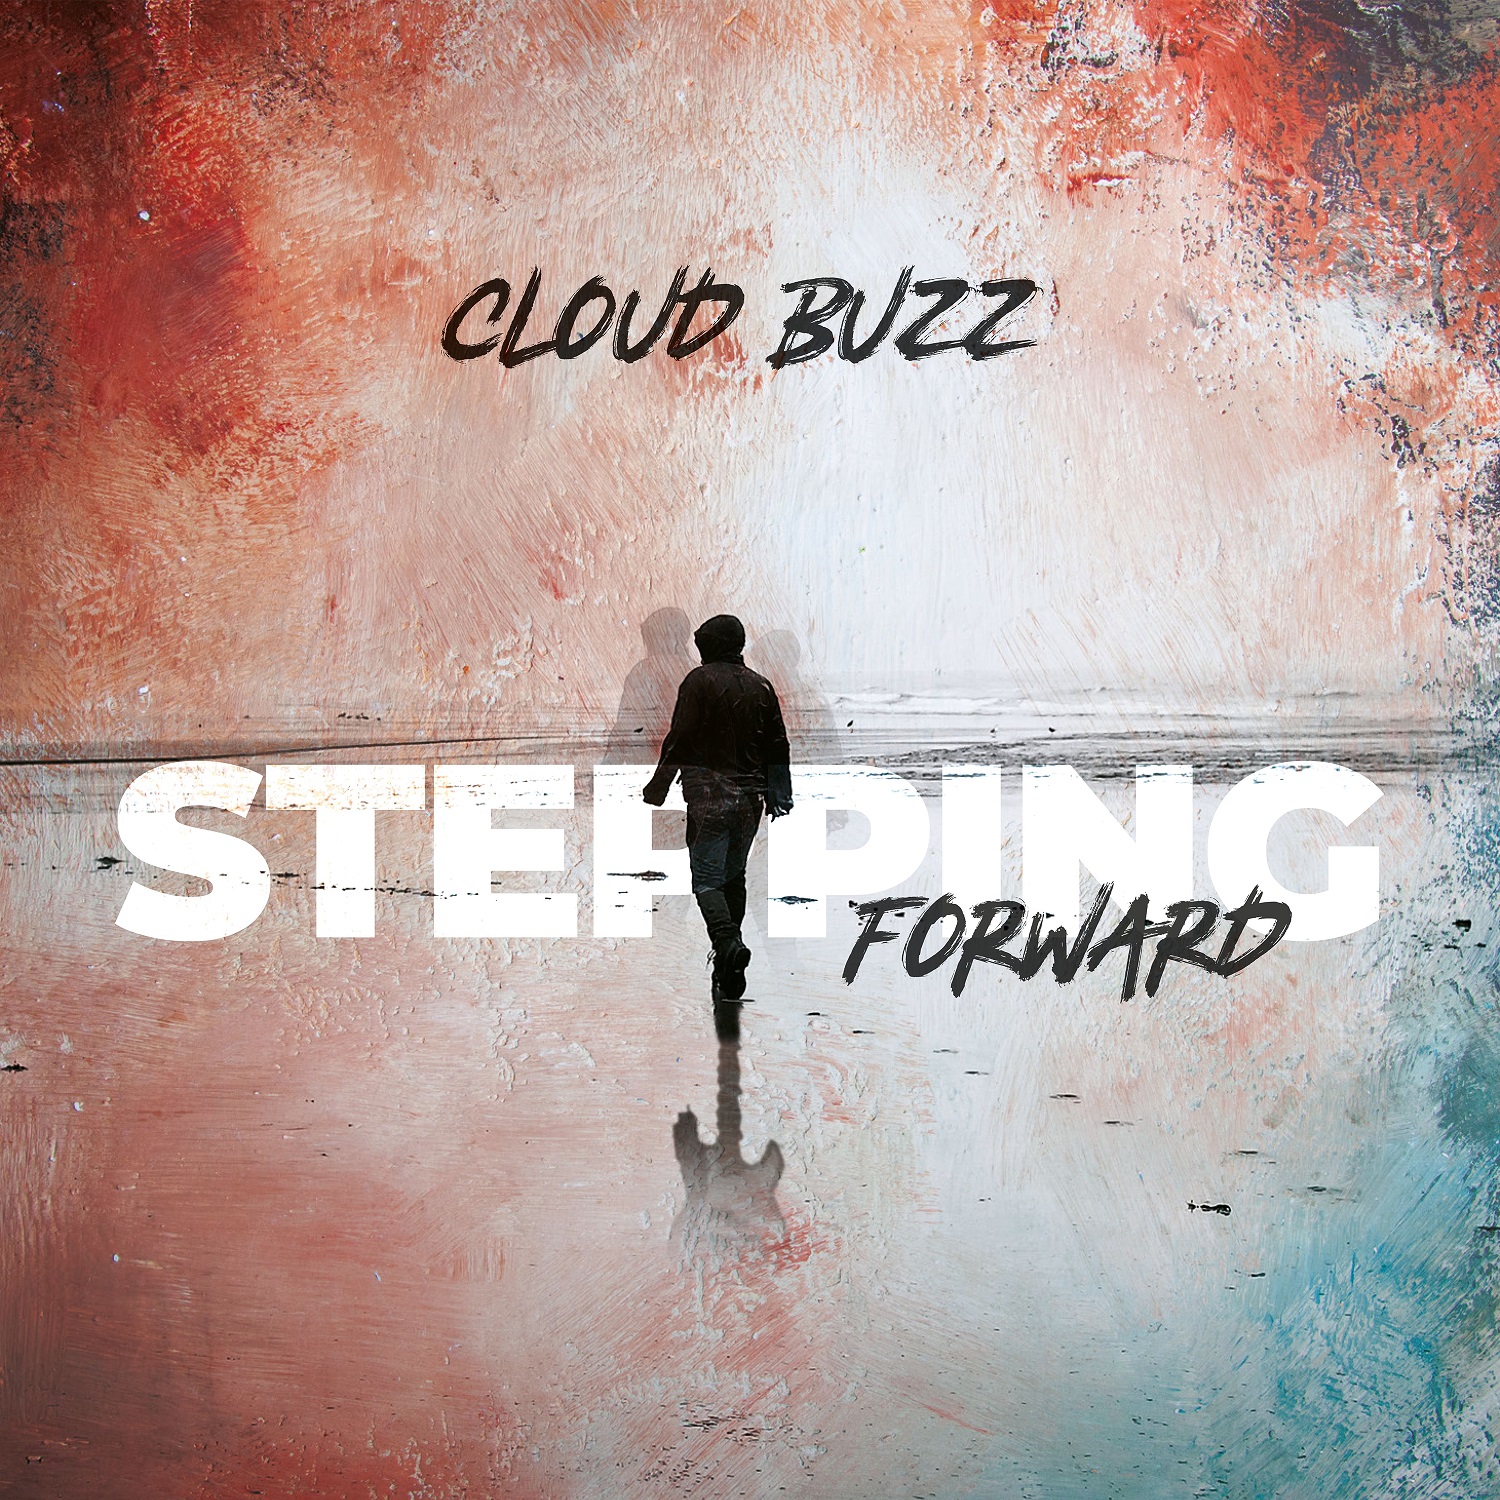 Cloud Buzz objavio prvi album “Stepping Forward”